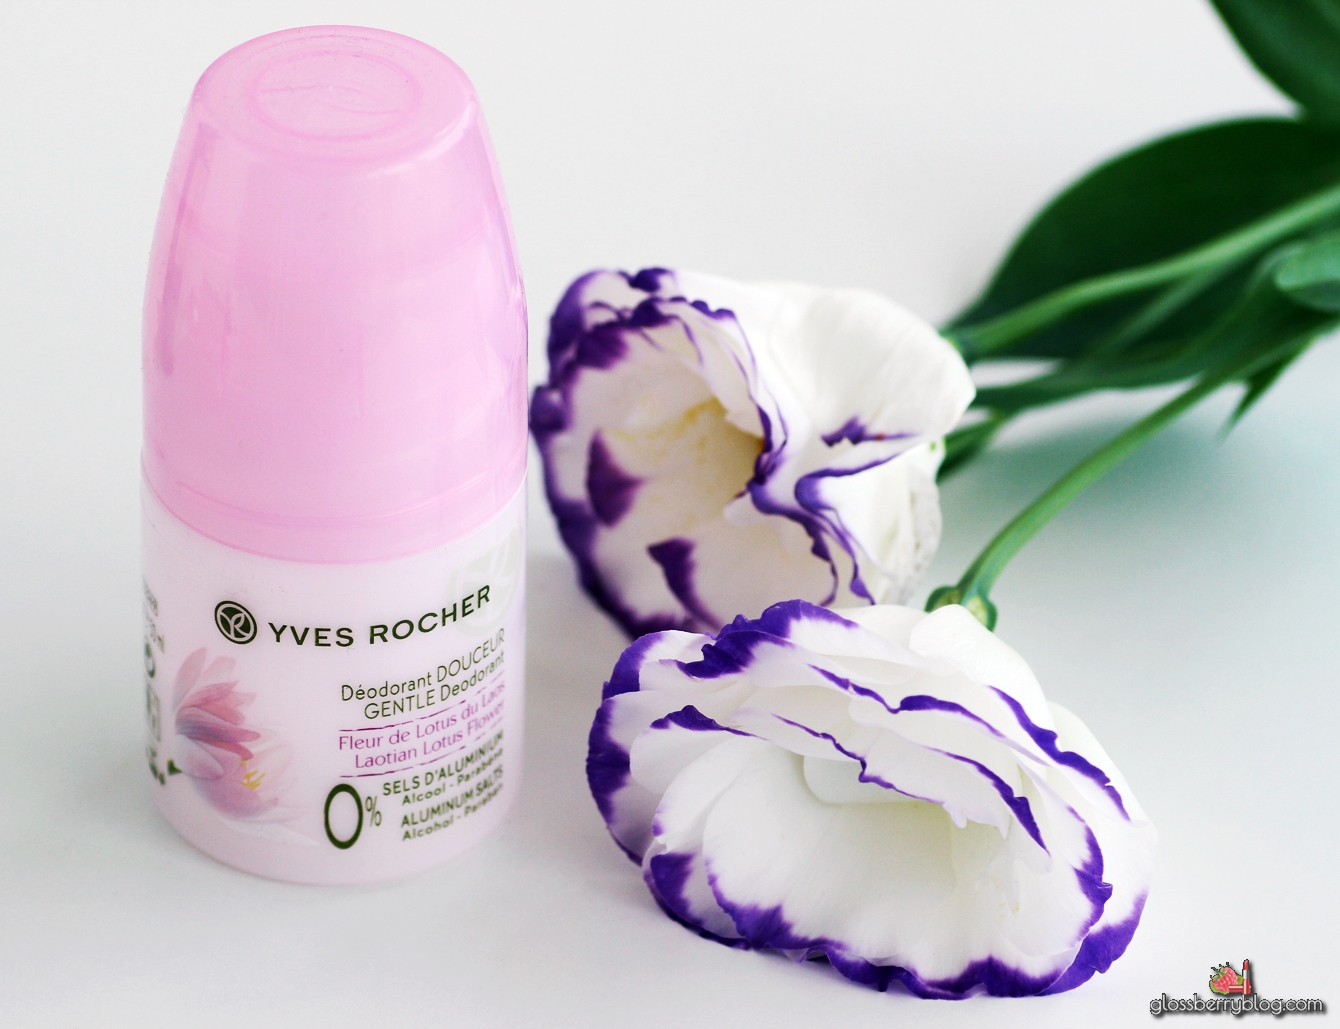  Yves Rocher - Laotian Lotus Flower Roll-On Deodorant דאודורנט איב רושה בישראל